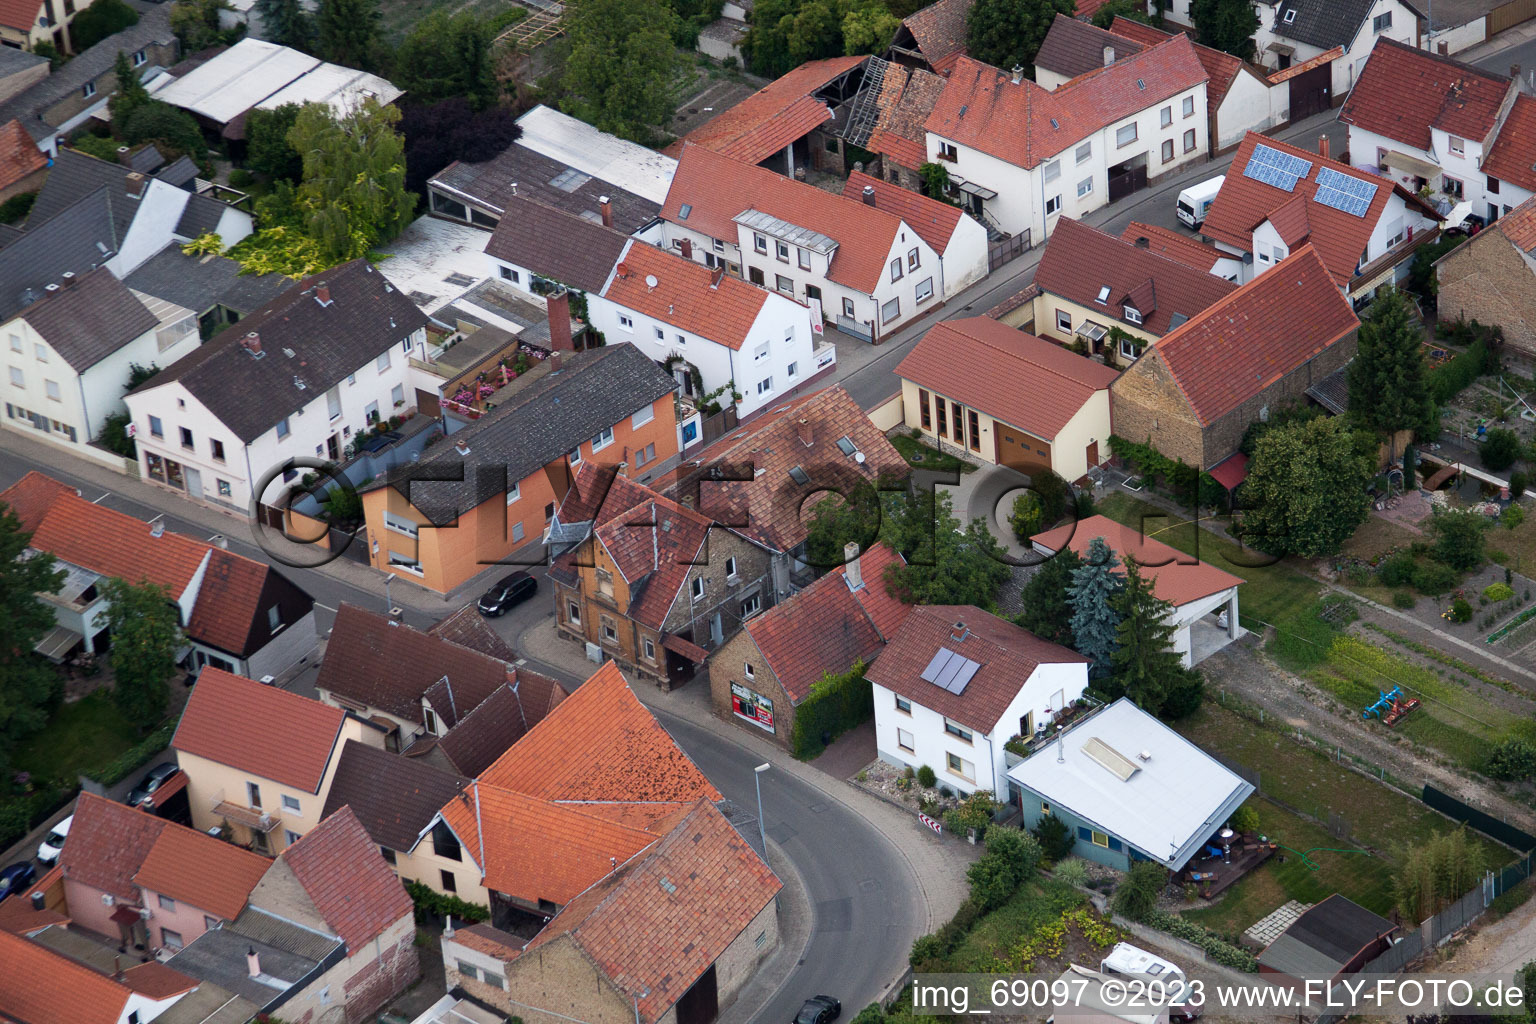 Drone recording of District Bobenheim in Bobenheim-Roxheim in the state Rhineland-Palatinate, Germany